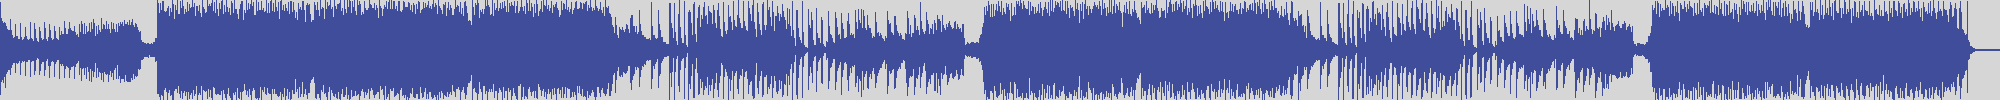 nf_boyz_records [NFY024] Micromaniac - Micromania [Micro Mix] audio wave form